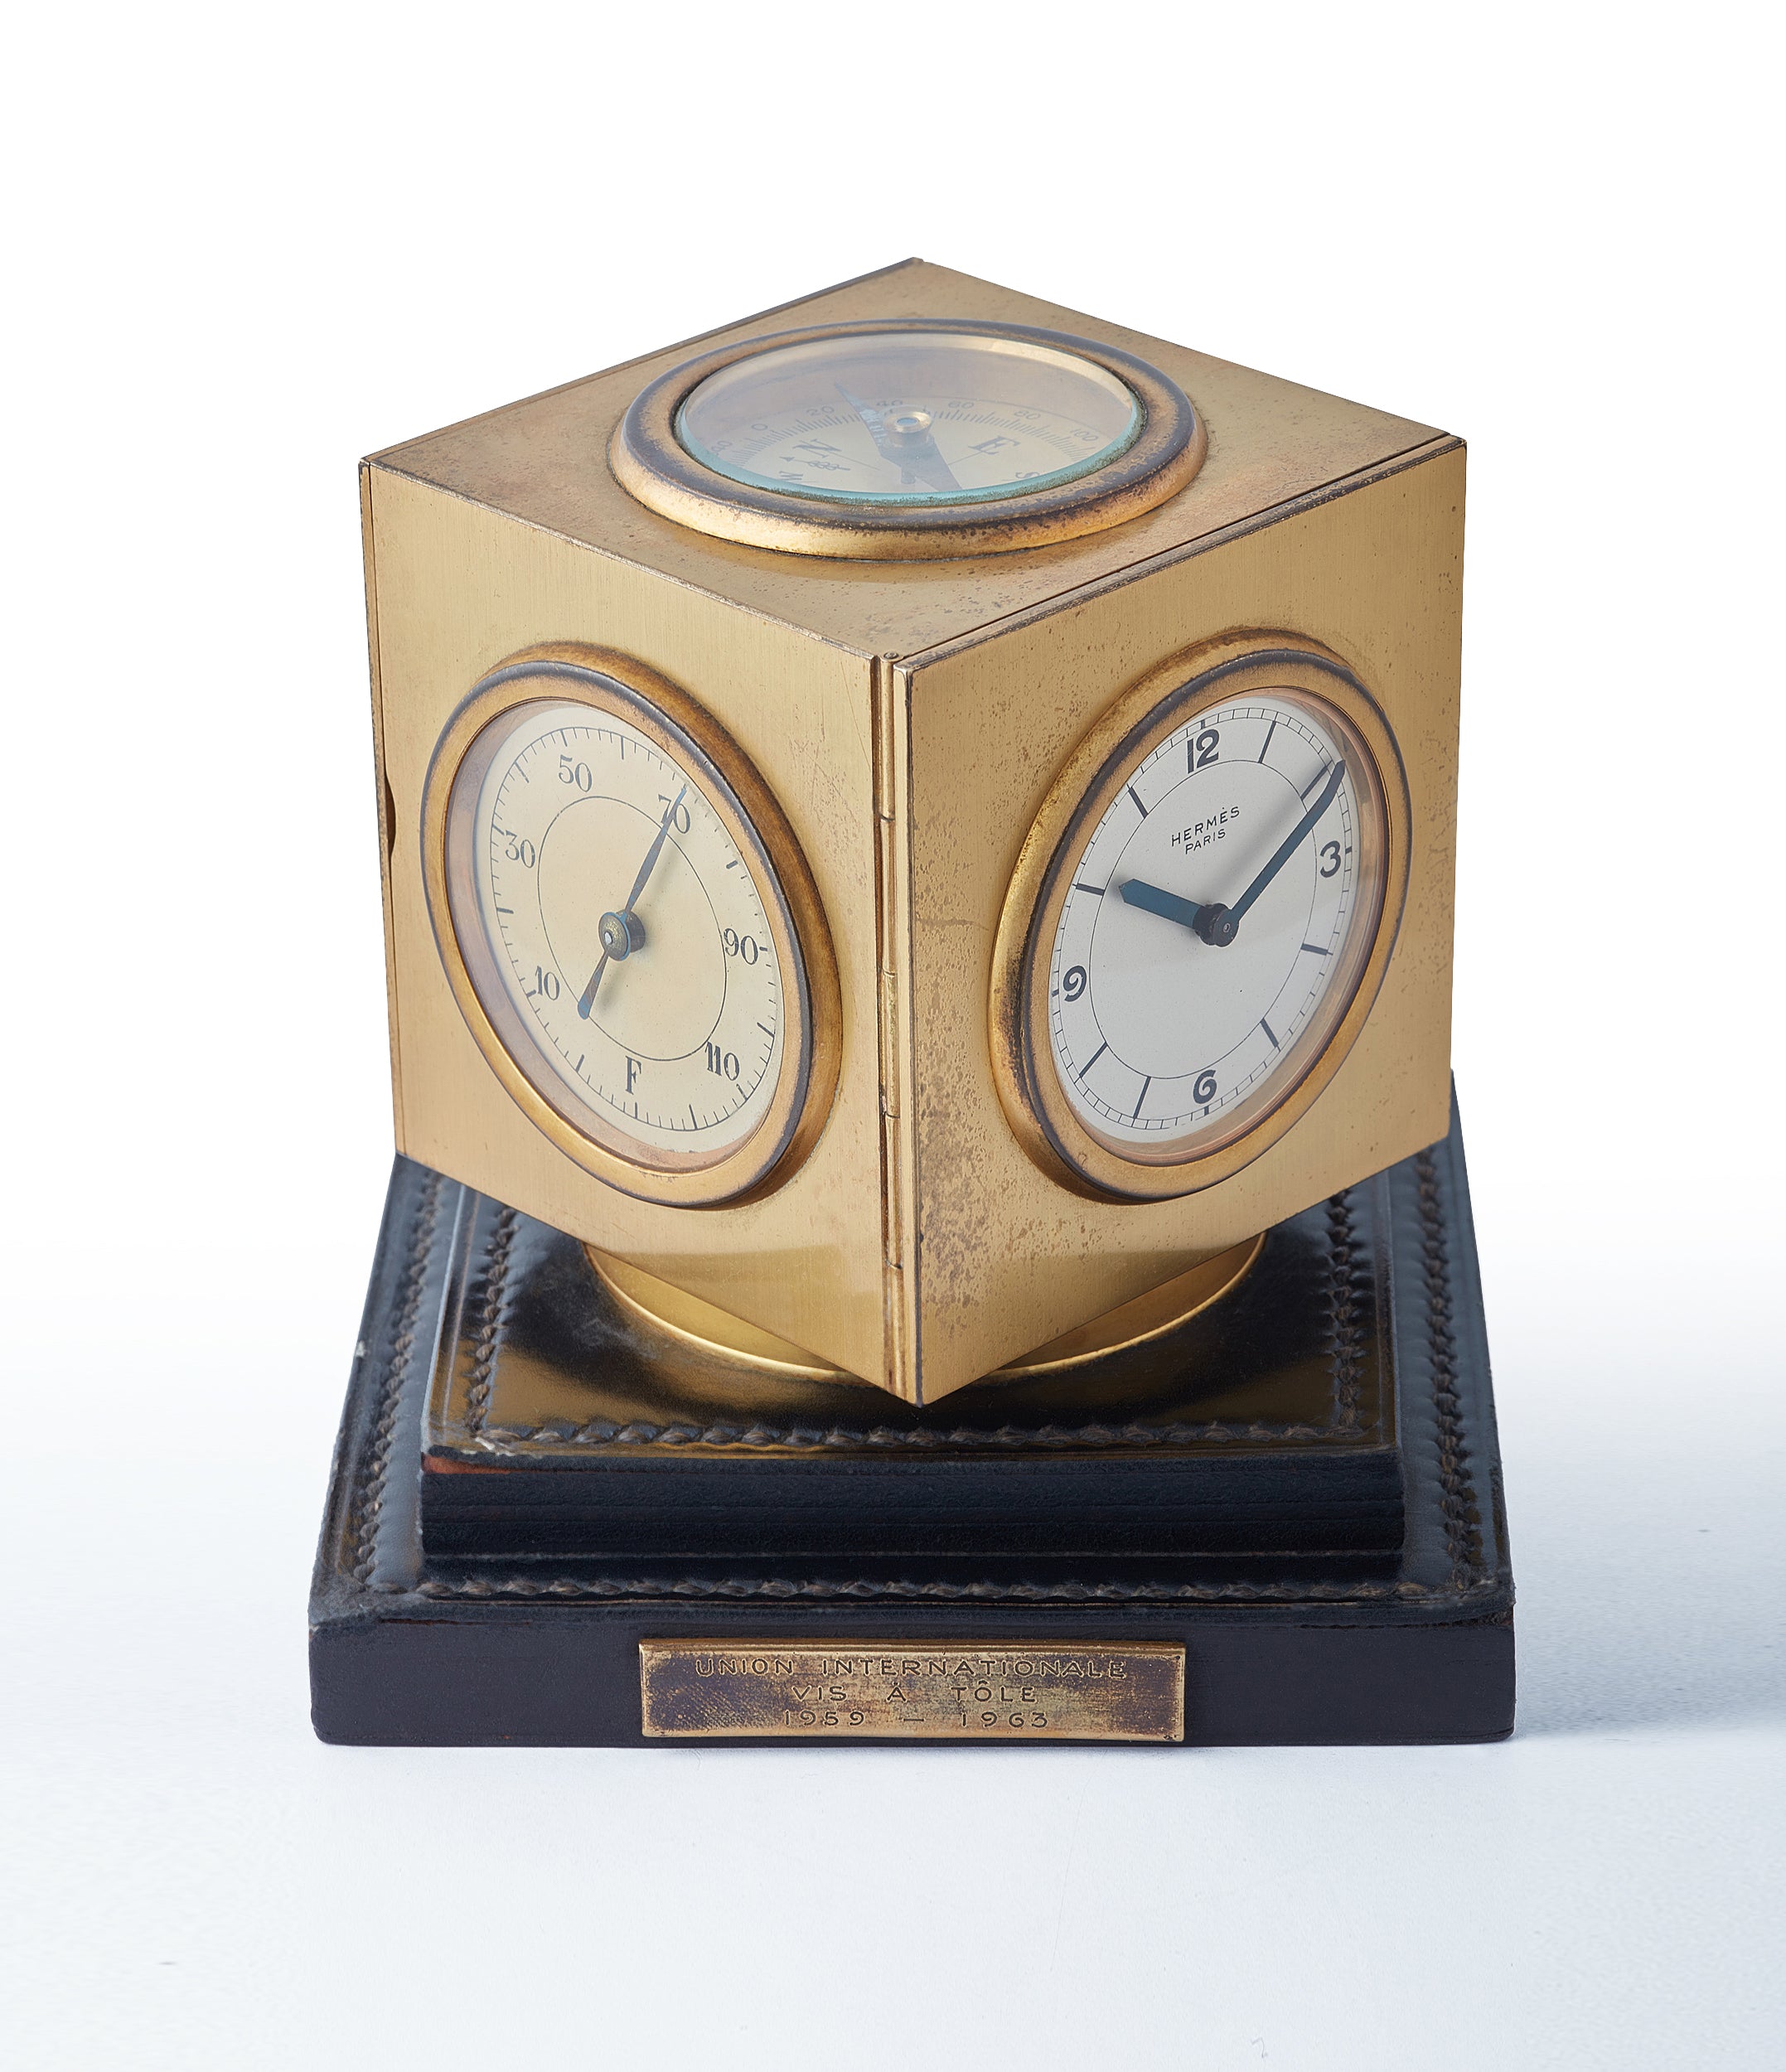 Hermes Paris Compendium Rare Desk Clock Buy Vintage Hermes Clock